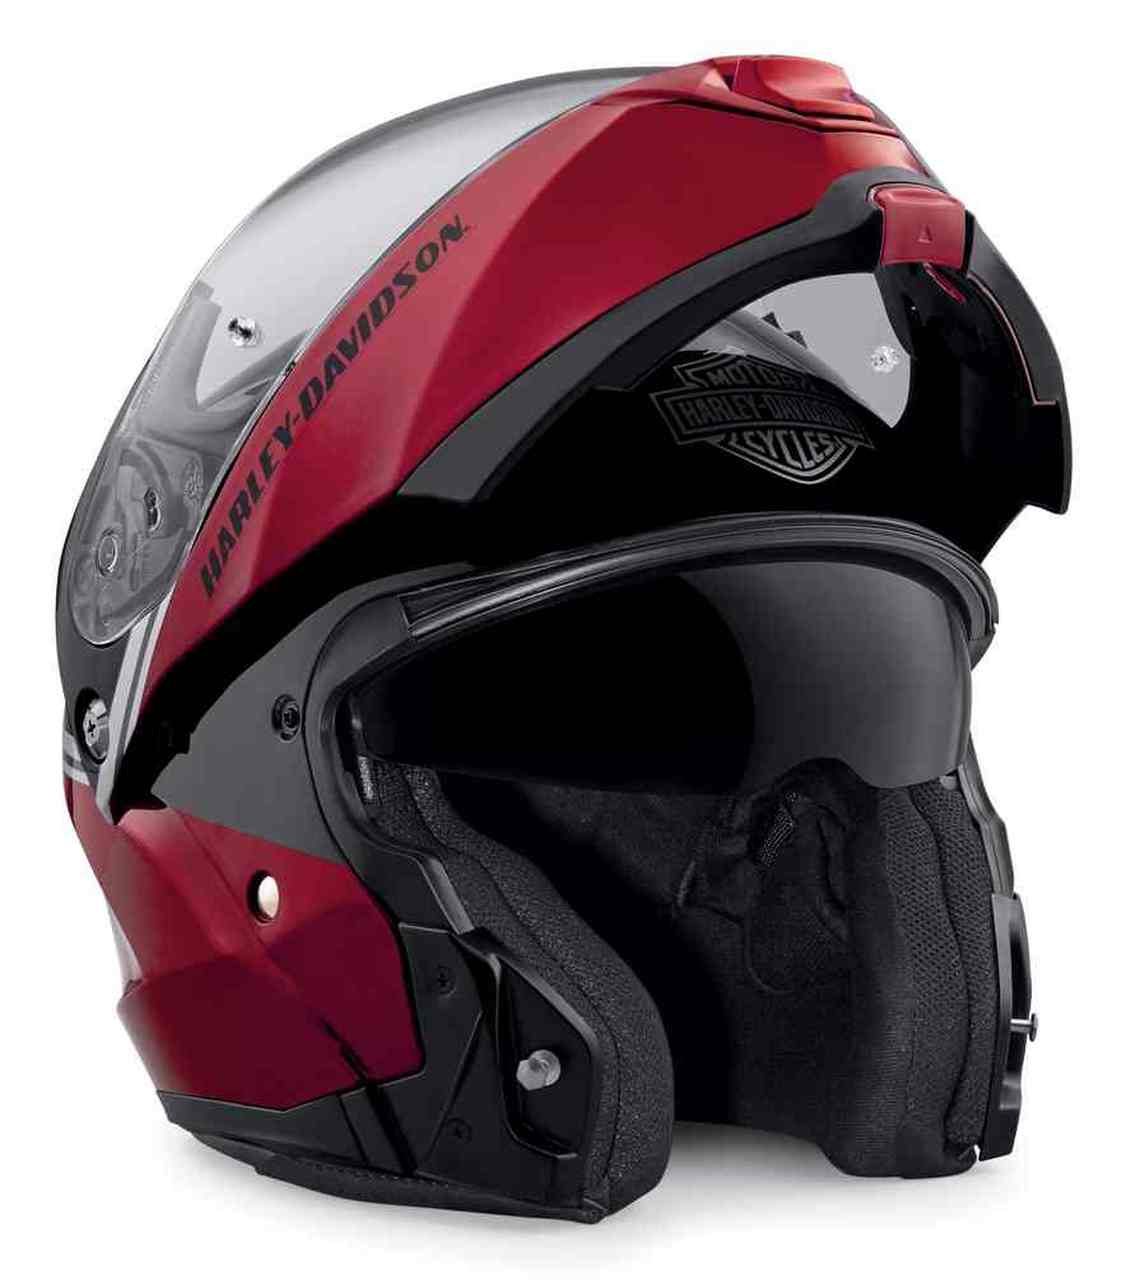 Harley-Davidson® Men’s Capstone Sun Shield H24 Modular Helmet, Red